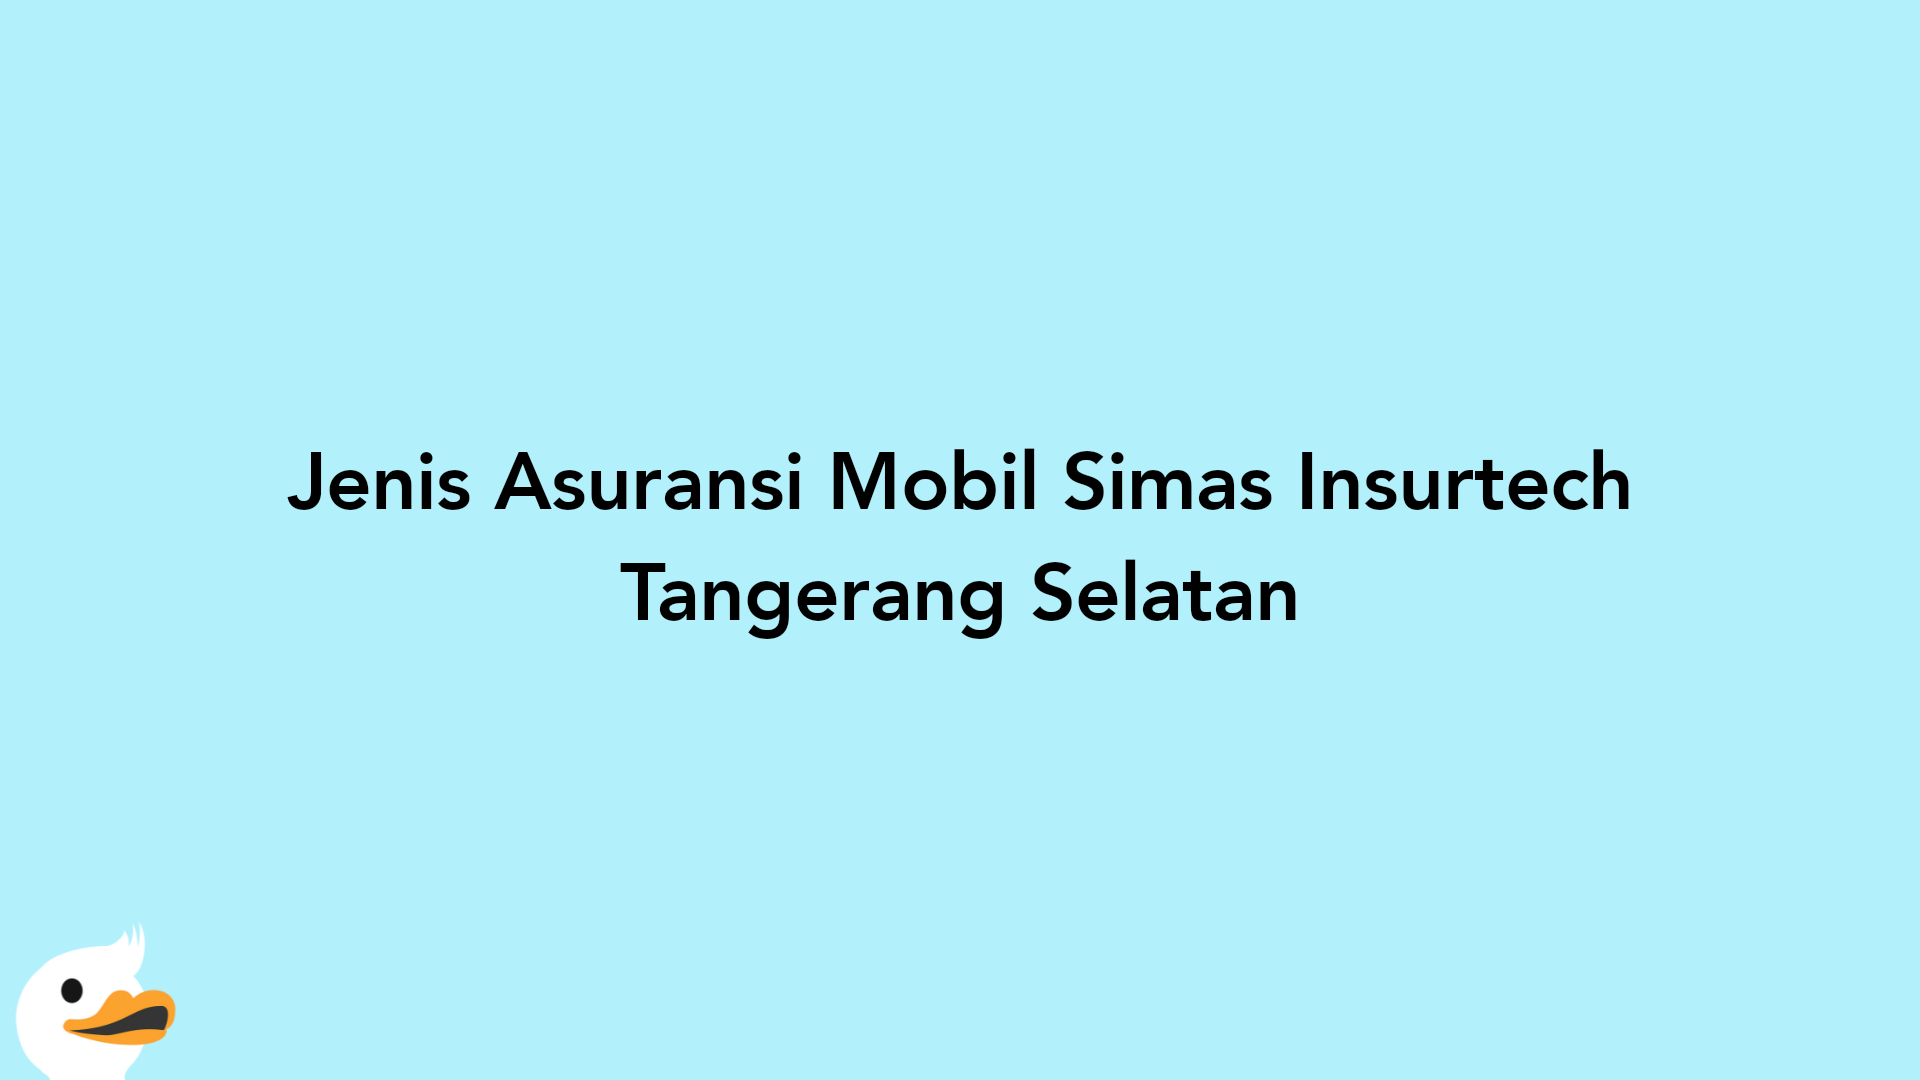 Jenis Asuransi Mobil Simas Insurtech Tangerang Selatan